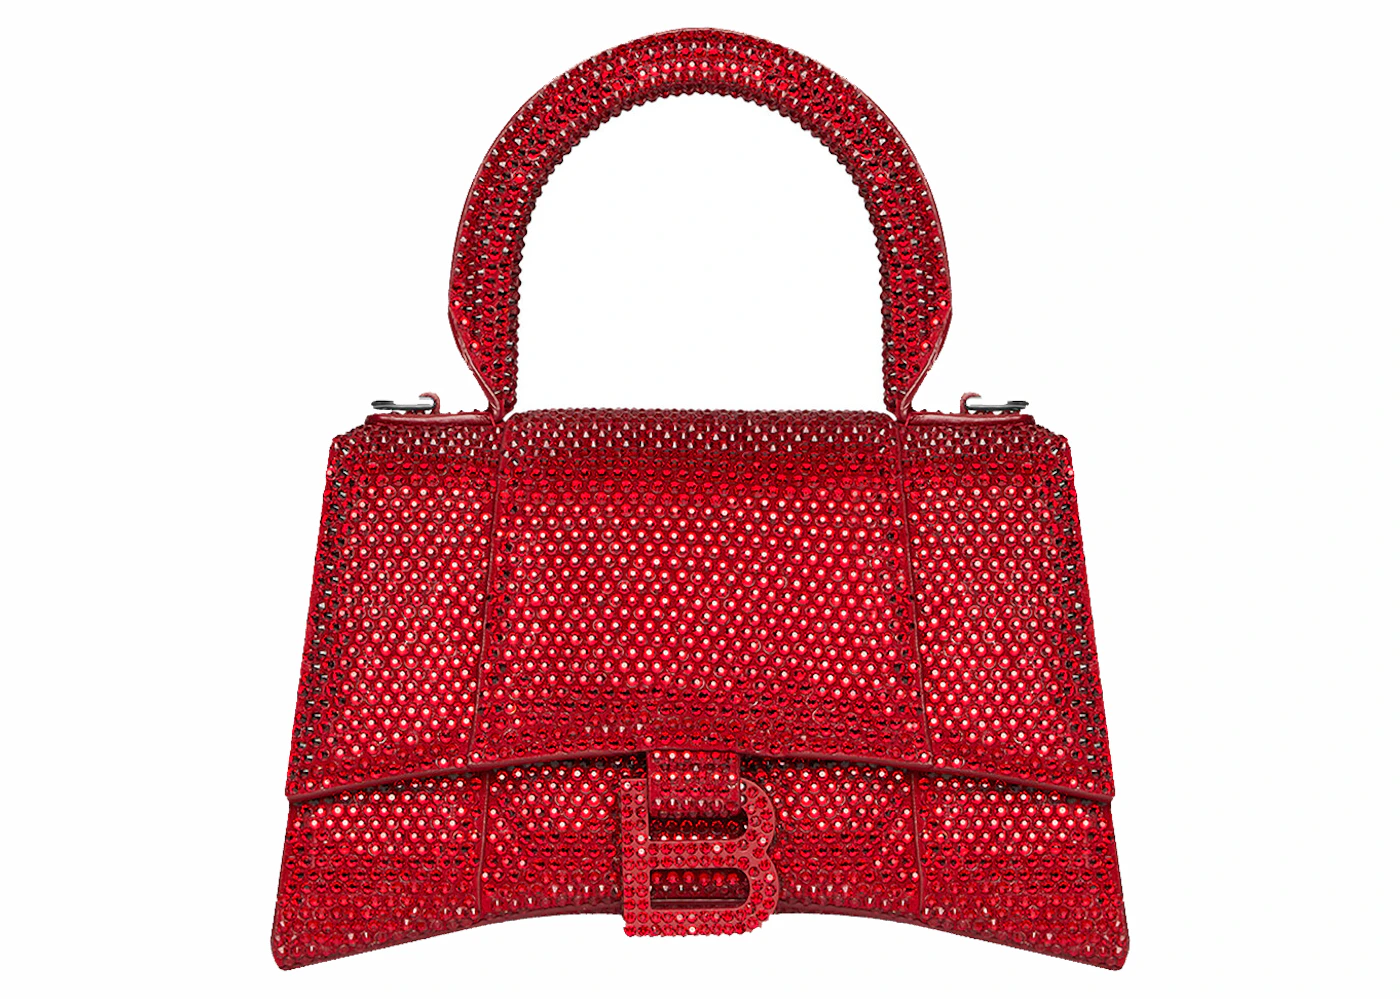 Balenciaga x Adidas Hourglass XS Box Handbag Red